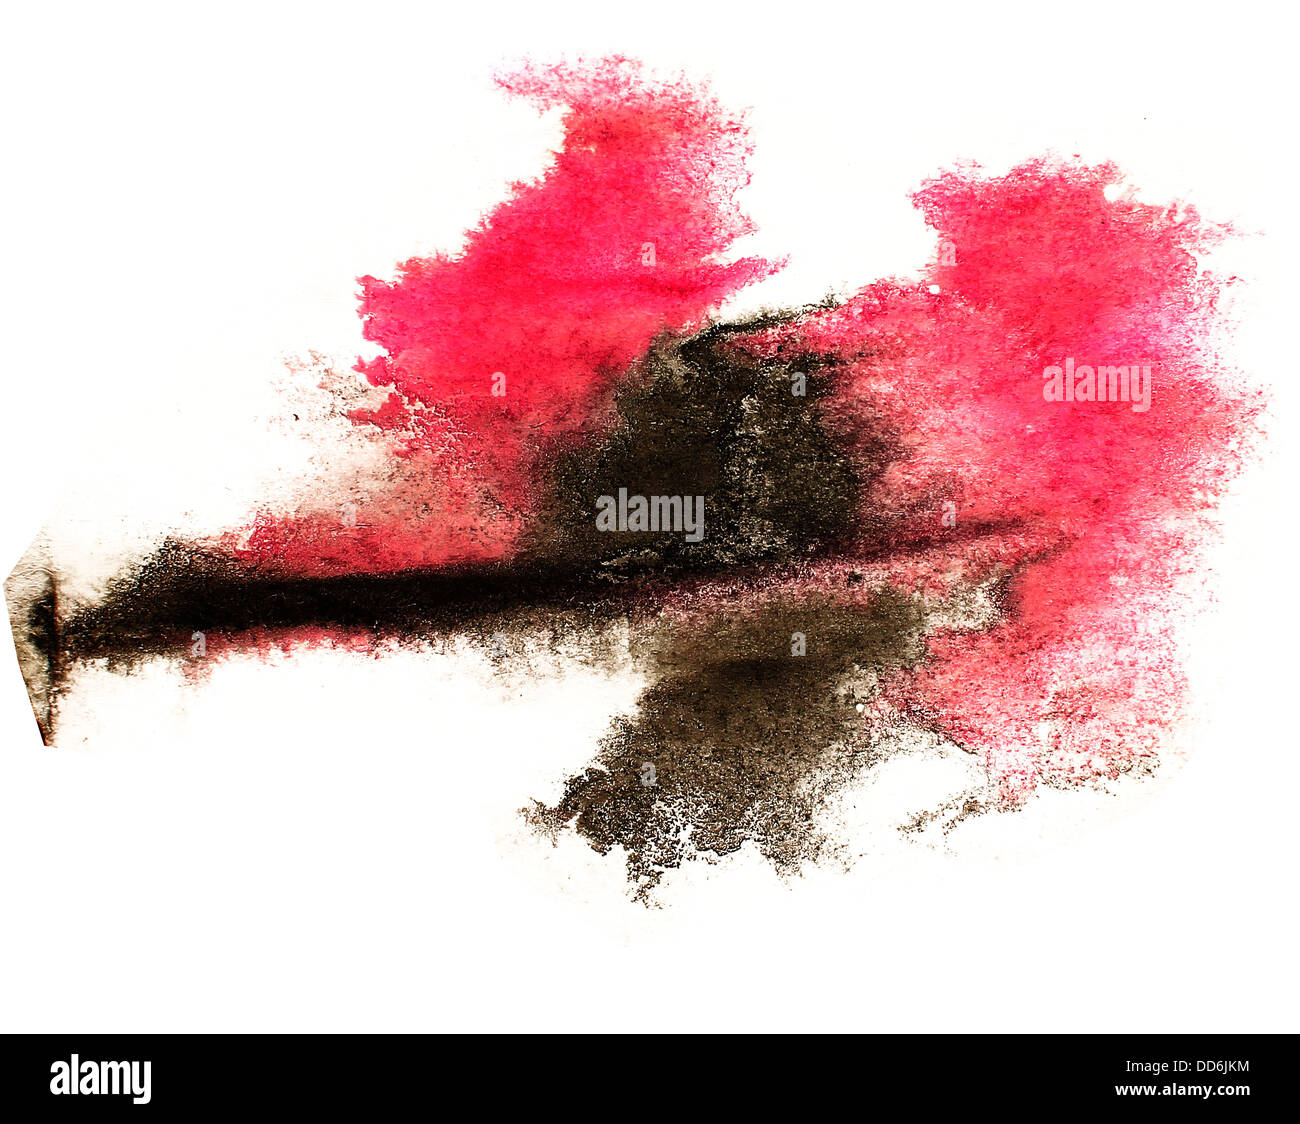 ink red, black watercolor paint splatter splash grunge background blot abstract texture splat art spray Stock Photo